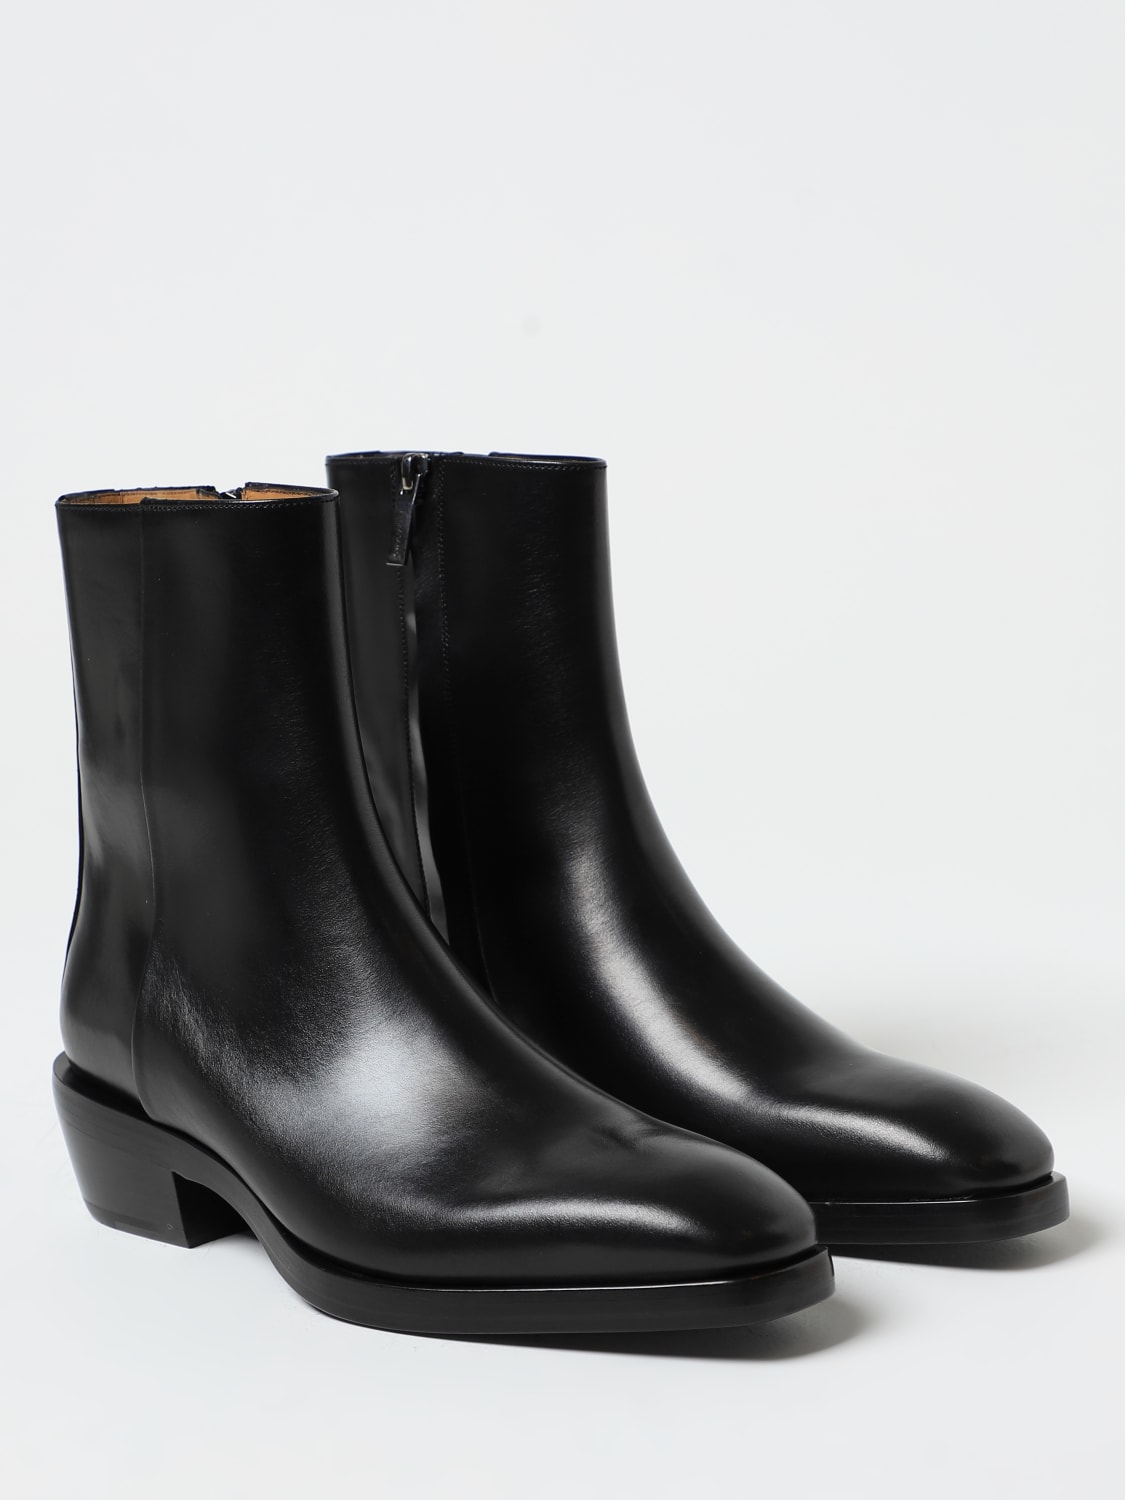 FERRAGAMO: leather ankle boots - Black | Ferragamo boots 021591 762529 ...